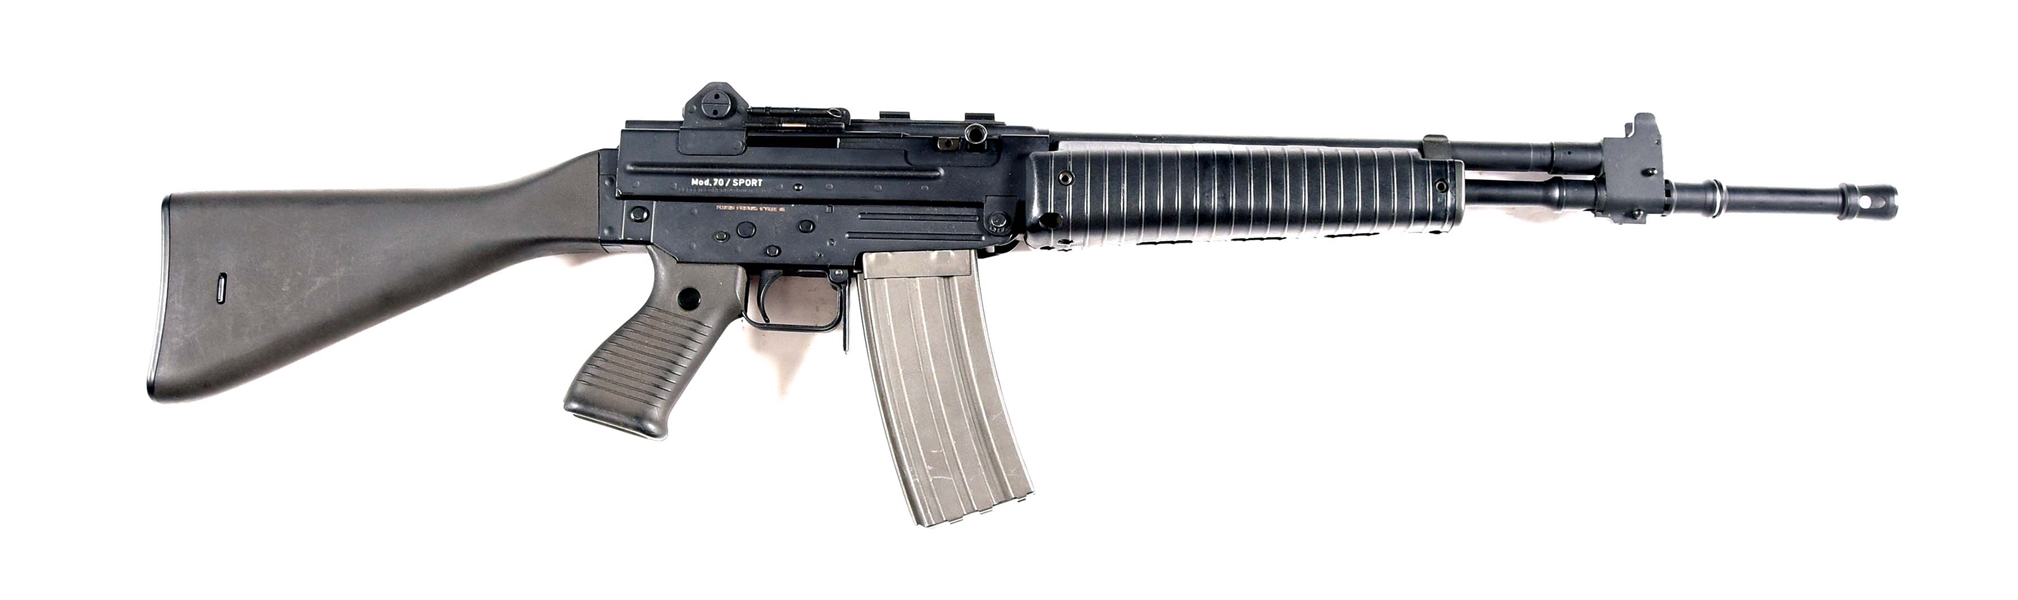 (N) HIGH CONDITION BERETTA AR-70 MACHINE GUN (FULLY TRANSFERABLE).